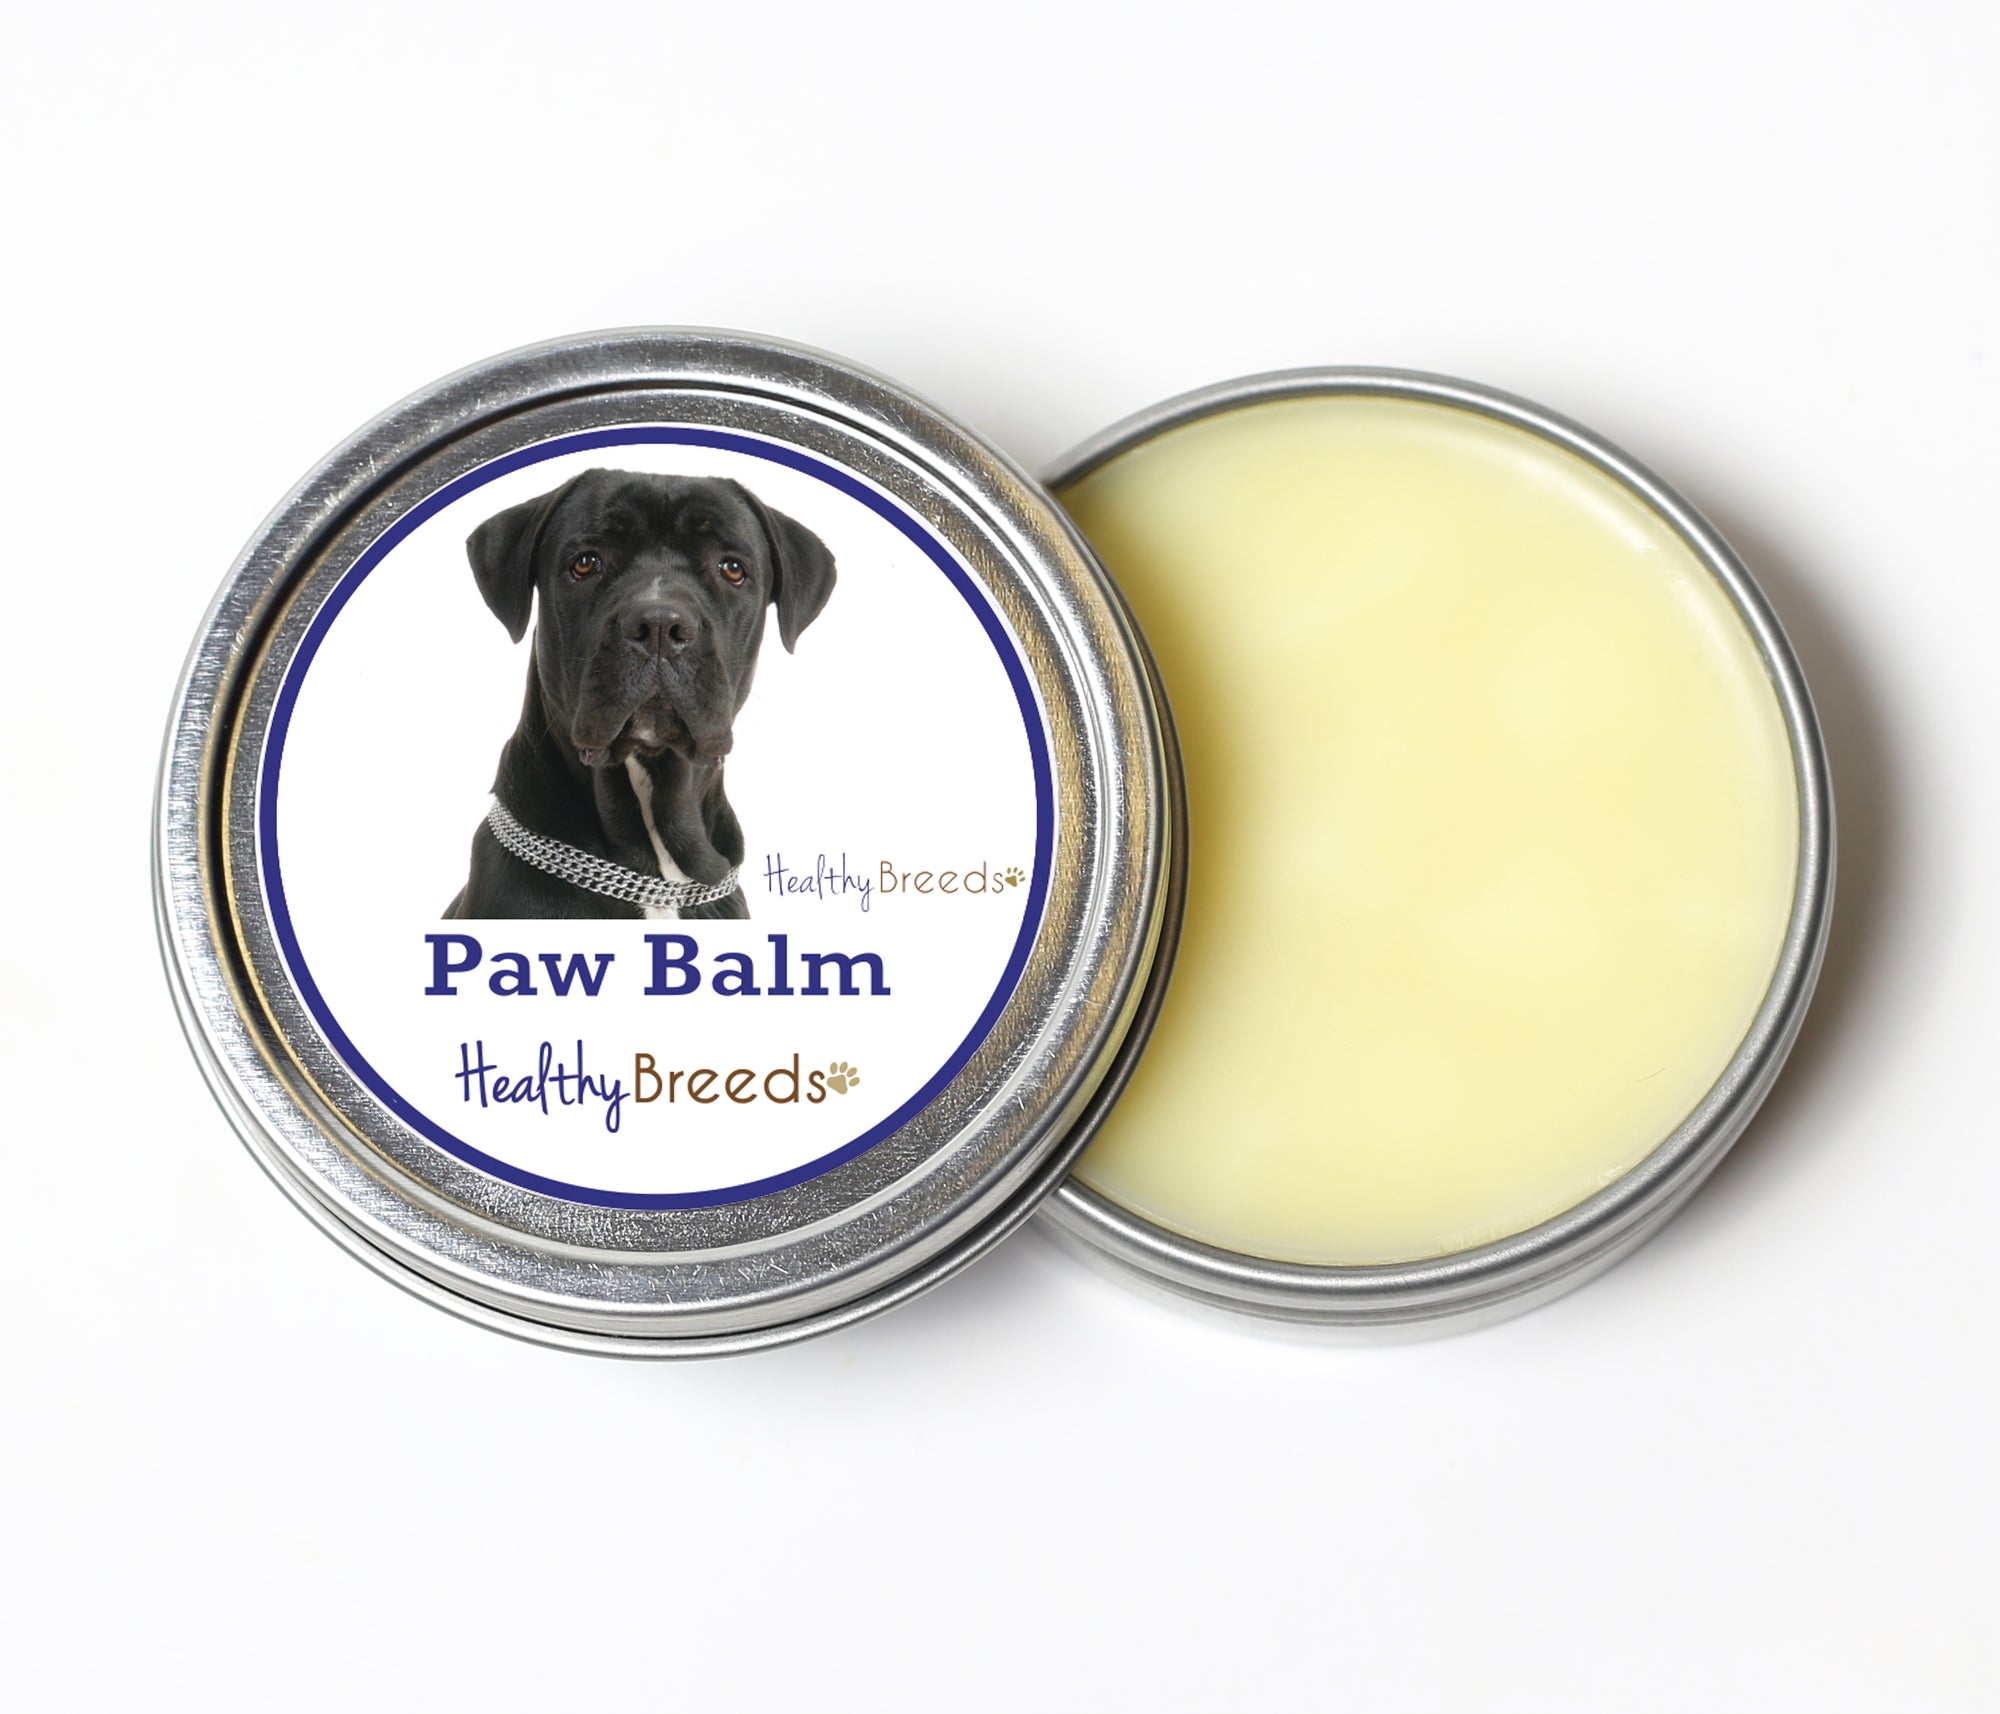 Healthy Breeds Cane Corso Dog Paw Balm 2 oz